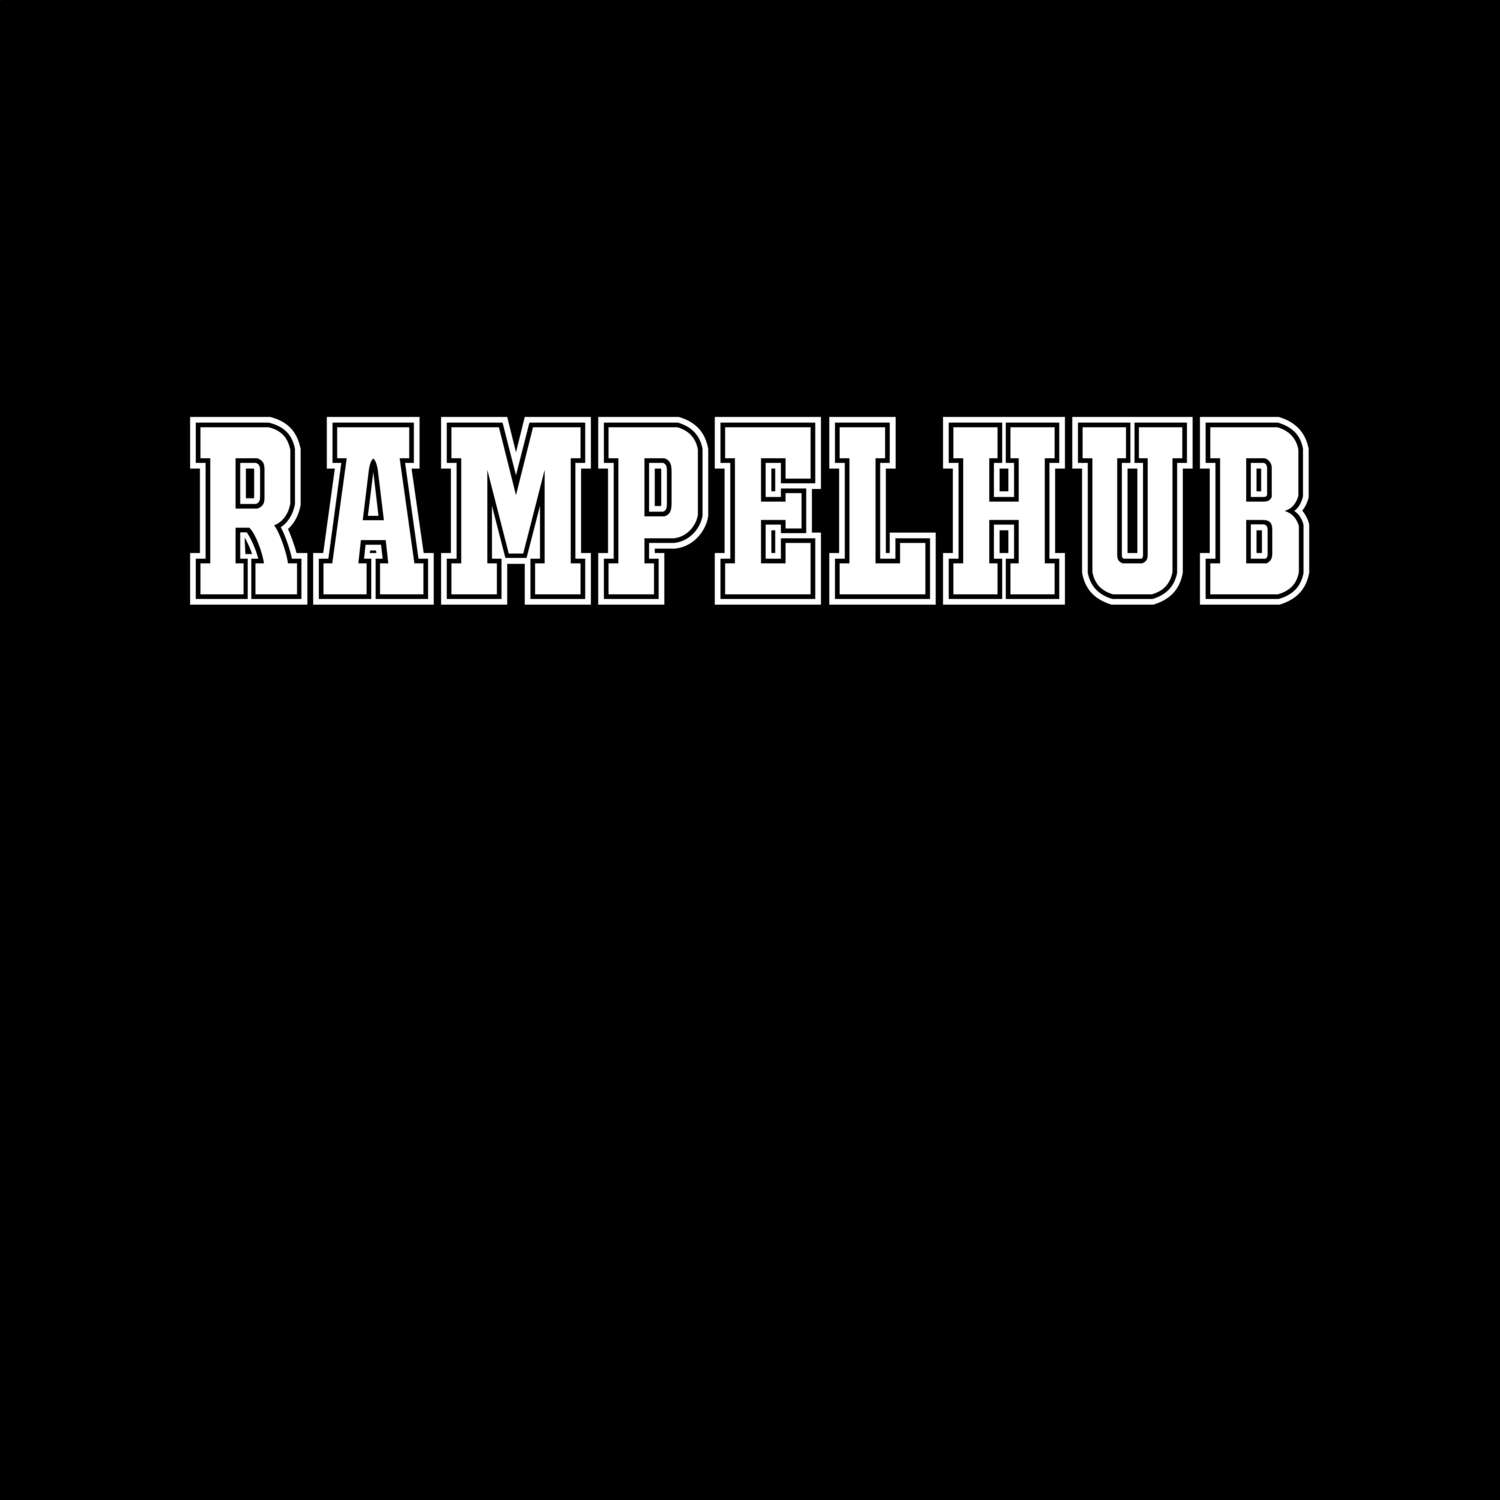 Rampelhub T-Shirt »Classic«